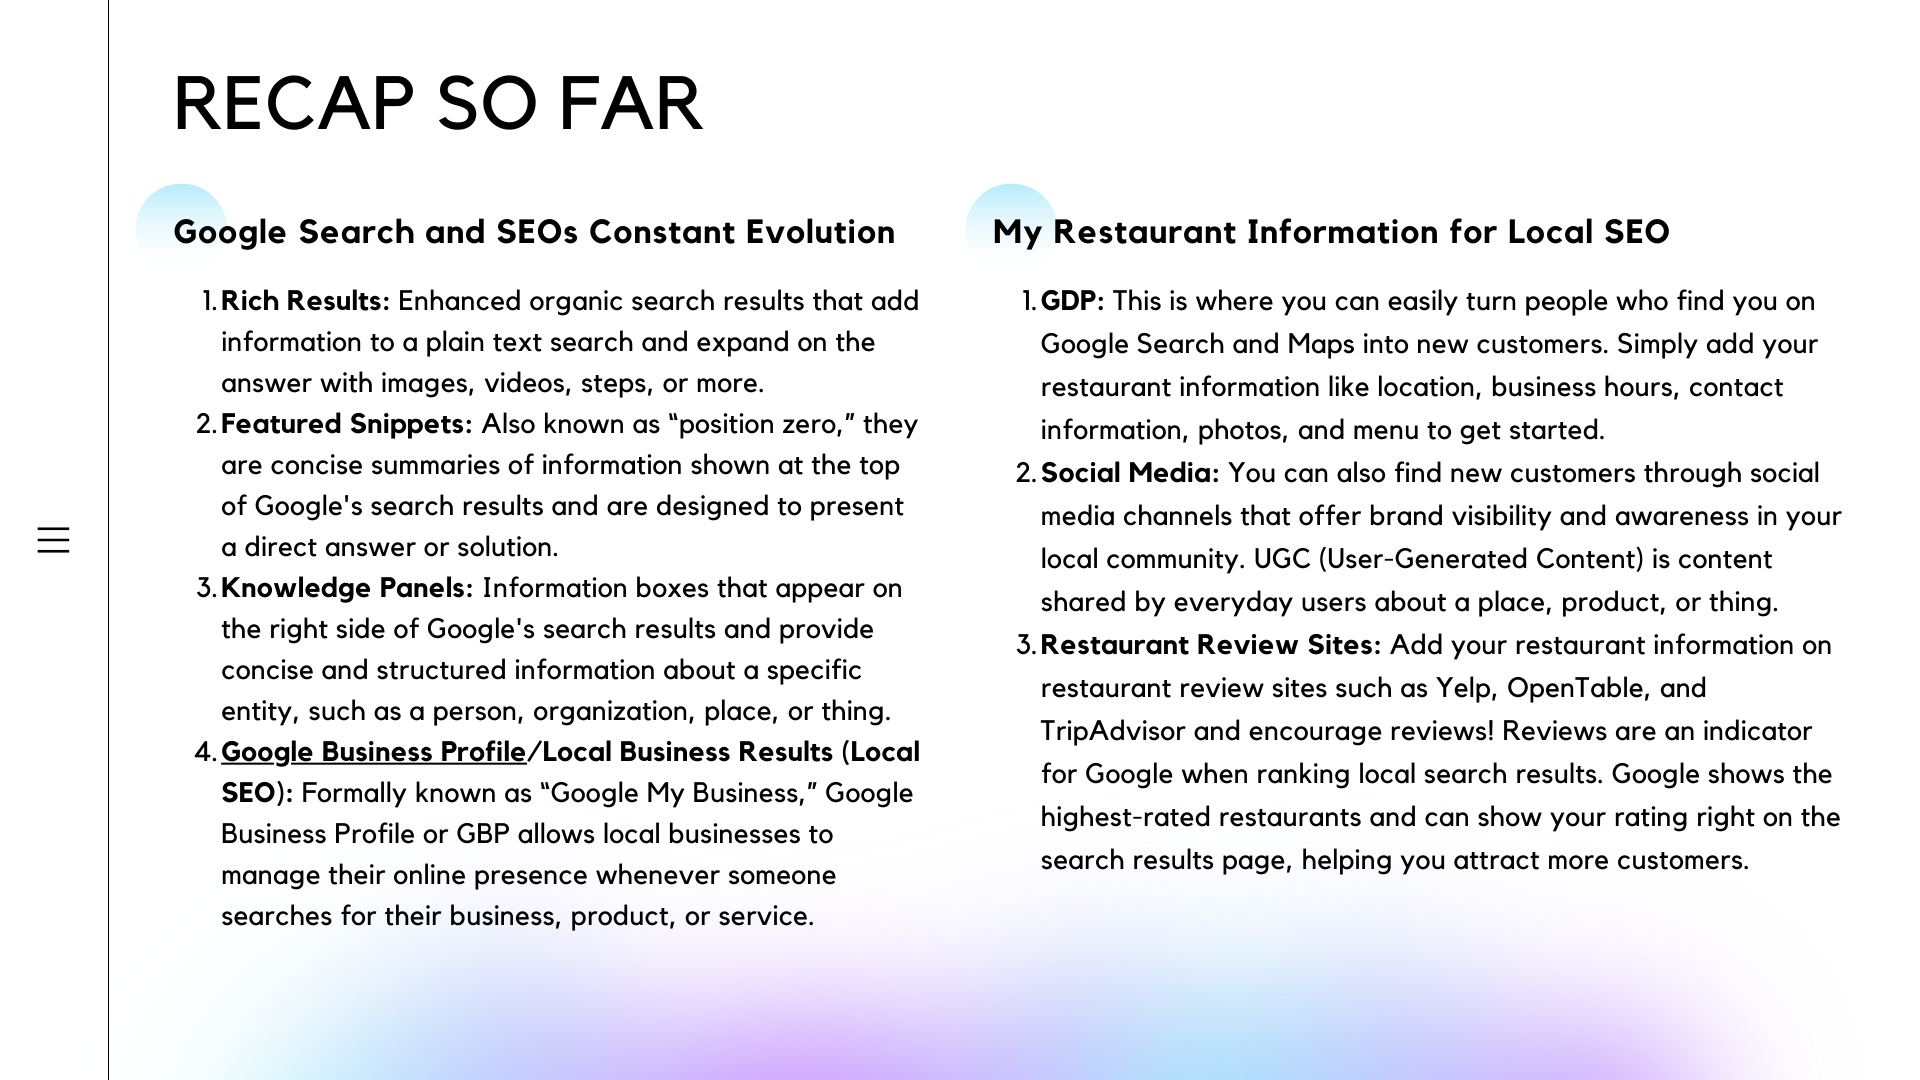 Restaurant SEO and Google Search recap image for Incentivio's Restaurant SEO blog.